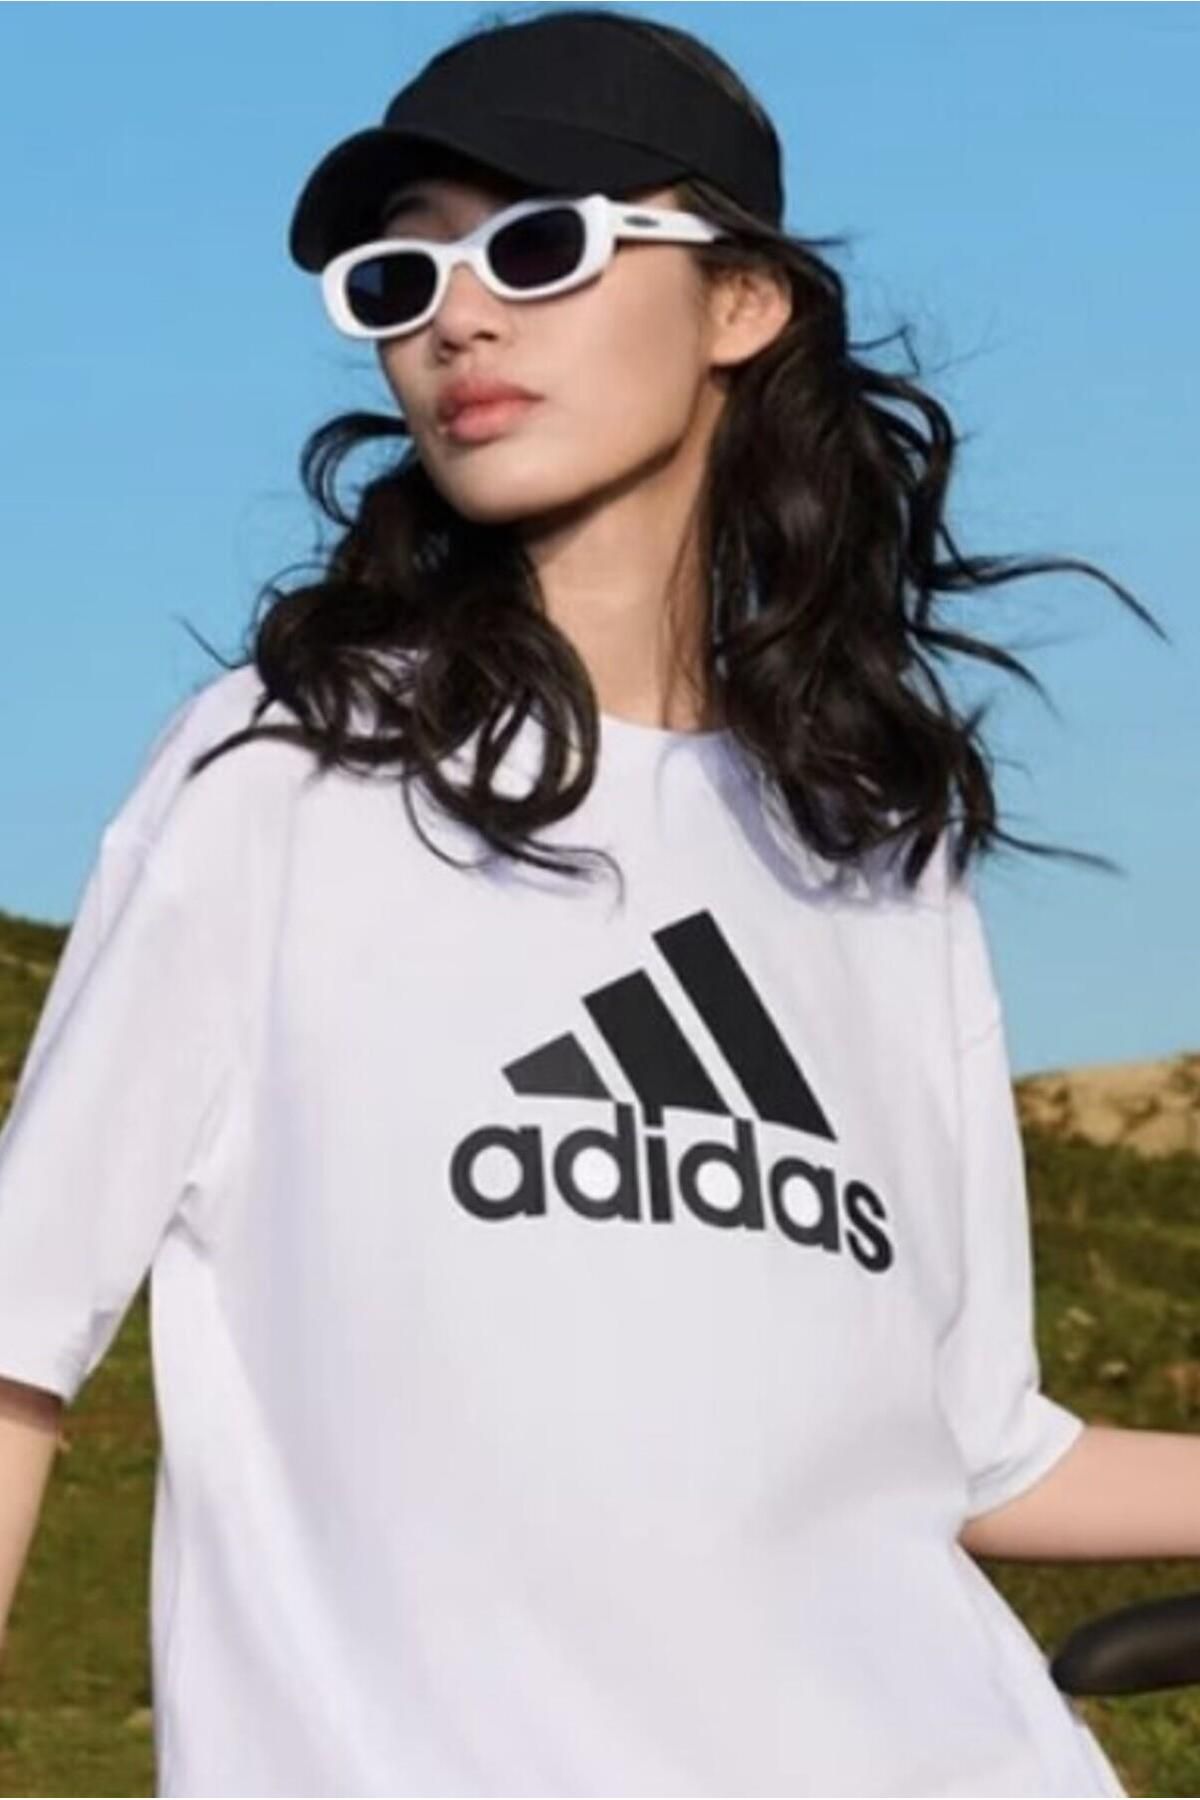 adidas adidas تی‌شرت زنانه با طراحی آینده‌نگرانه و نشان از ورزش (مدل راحتی) - رنگ سفید